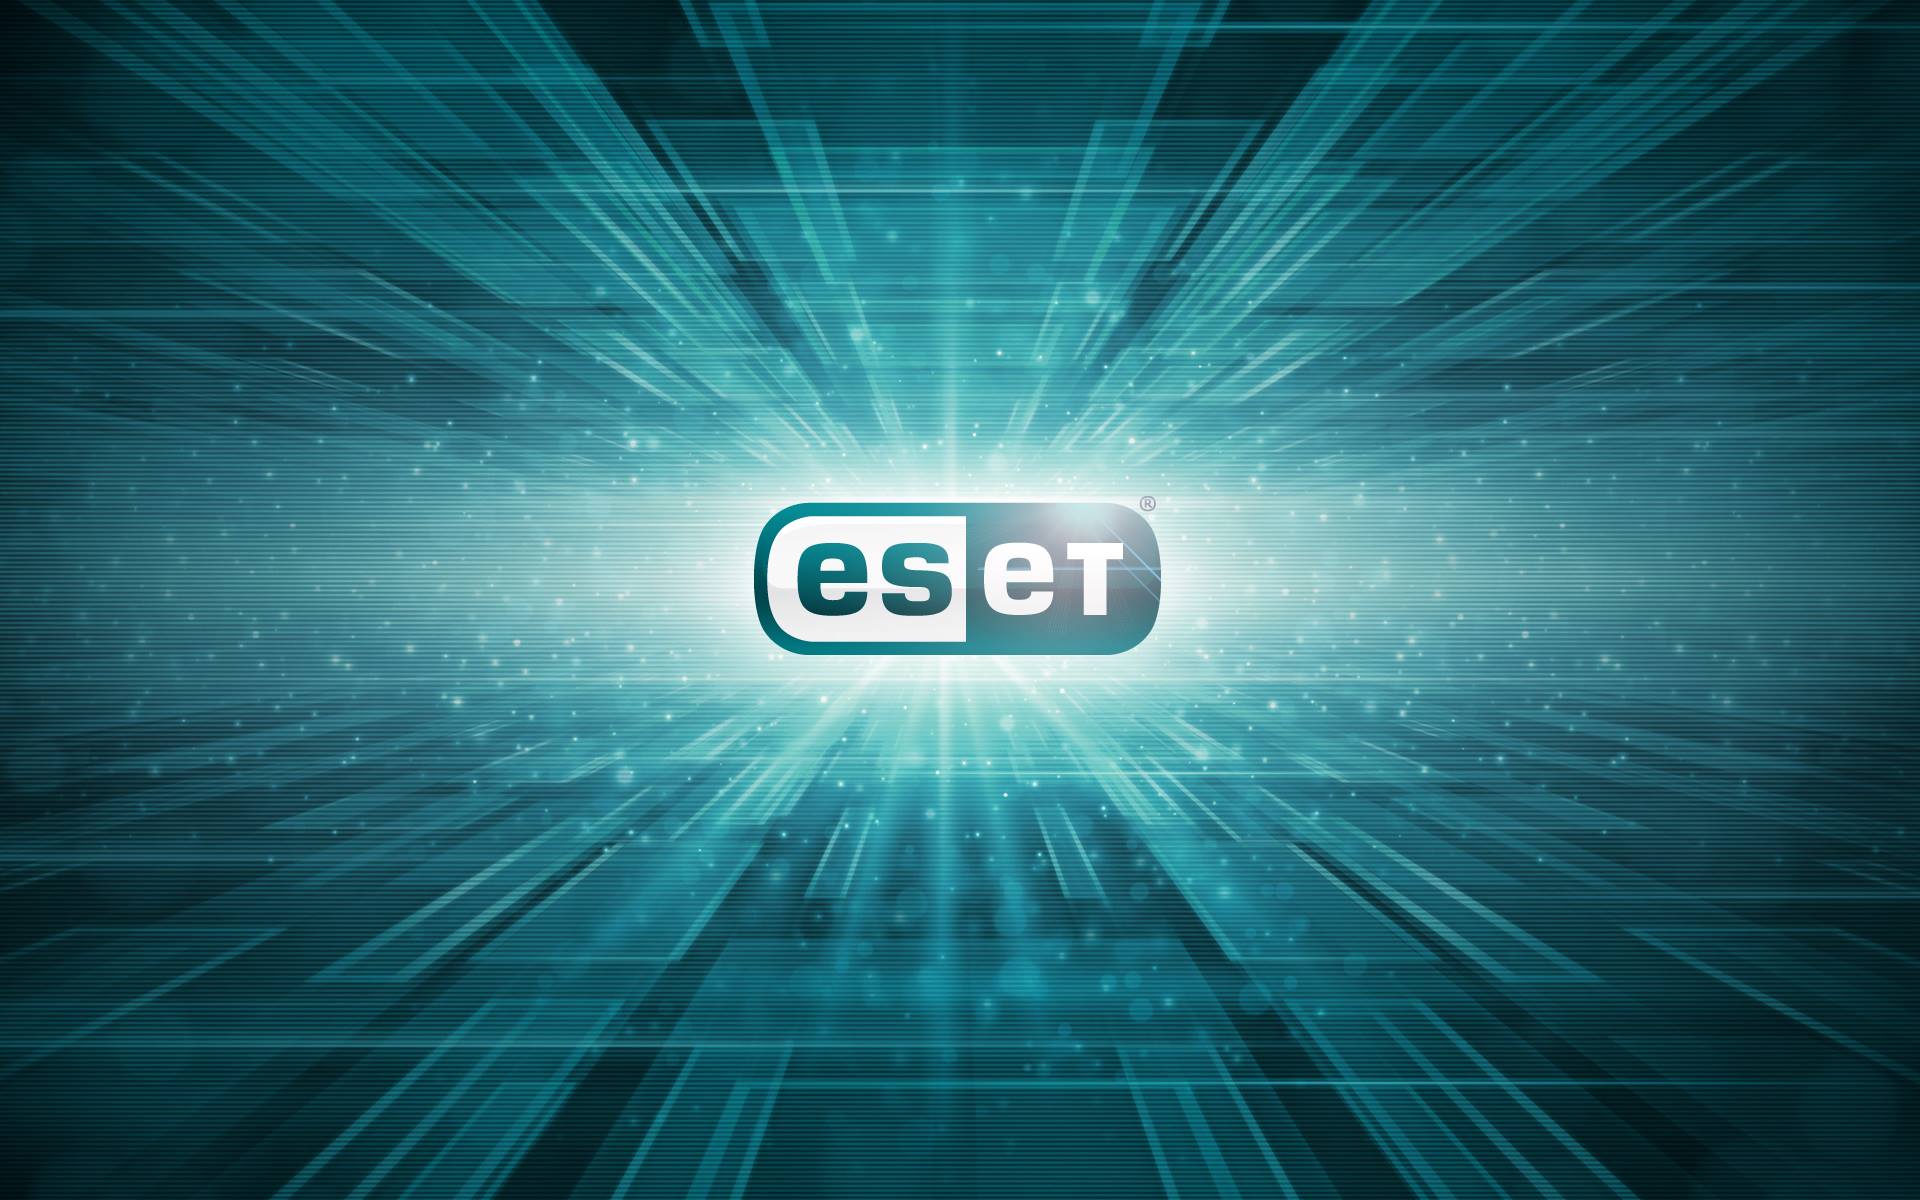 Eset Logo - About ESET